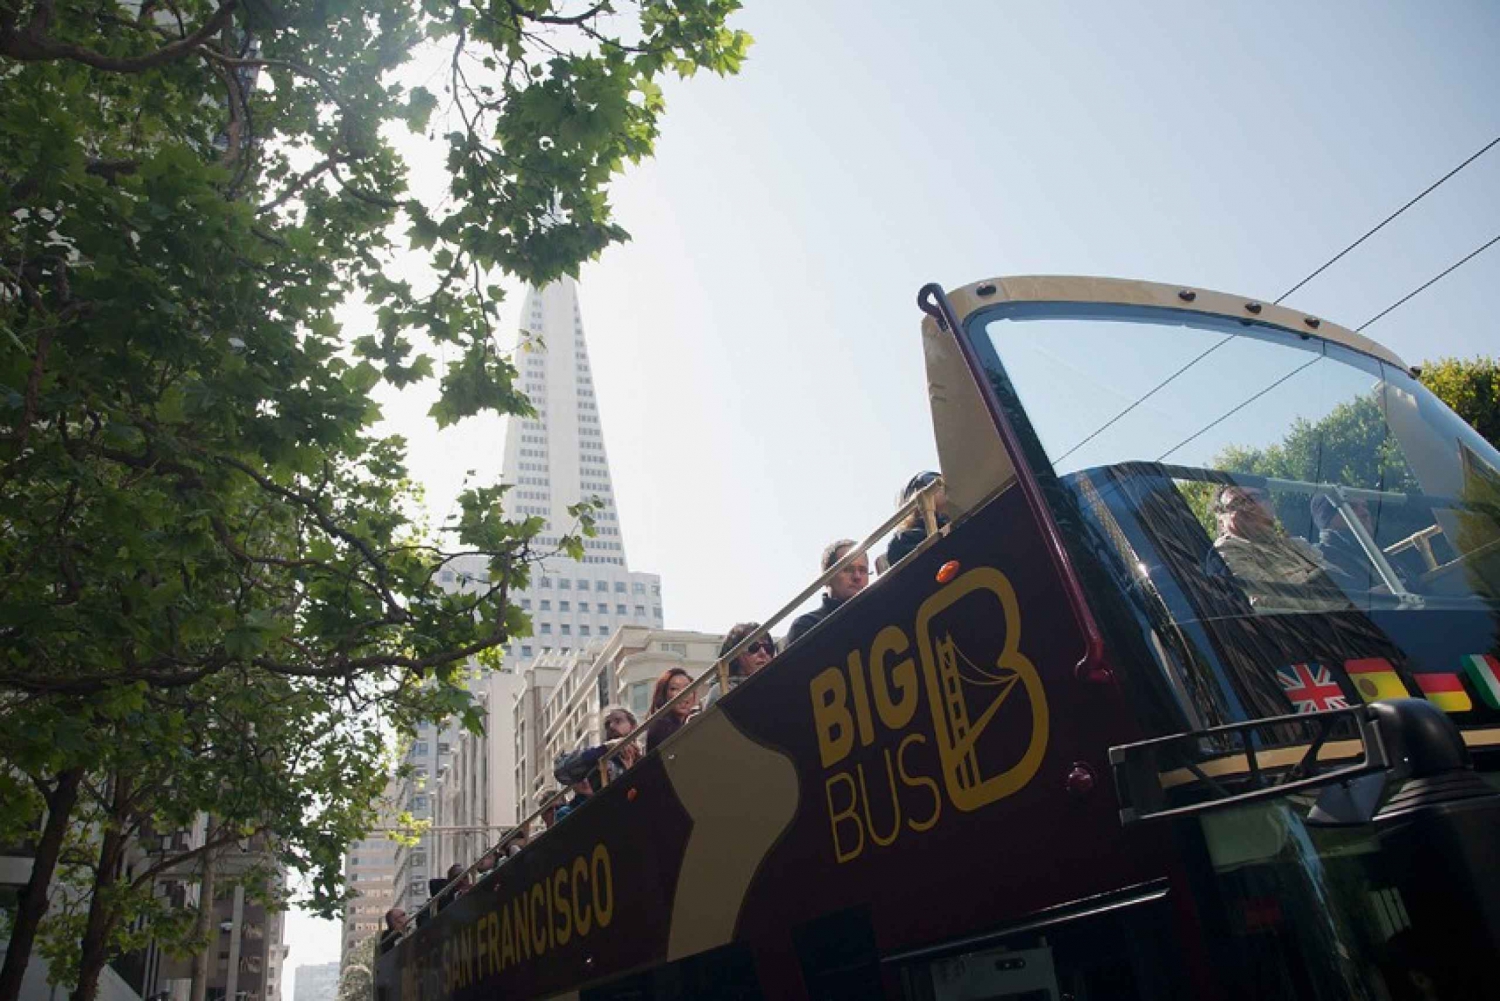 SF: Hop-On Hop-Off Bus Tour & California Academy of Sciences